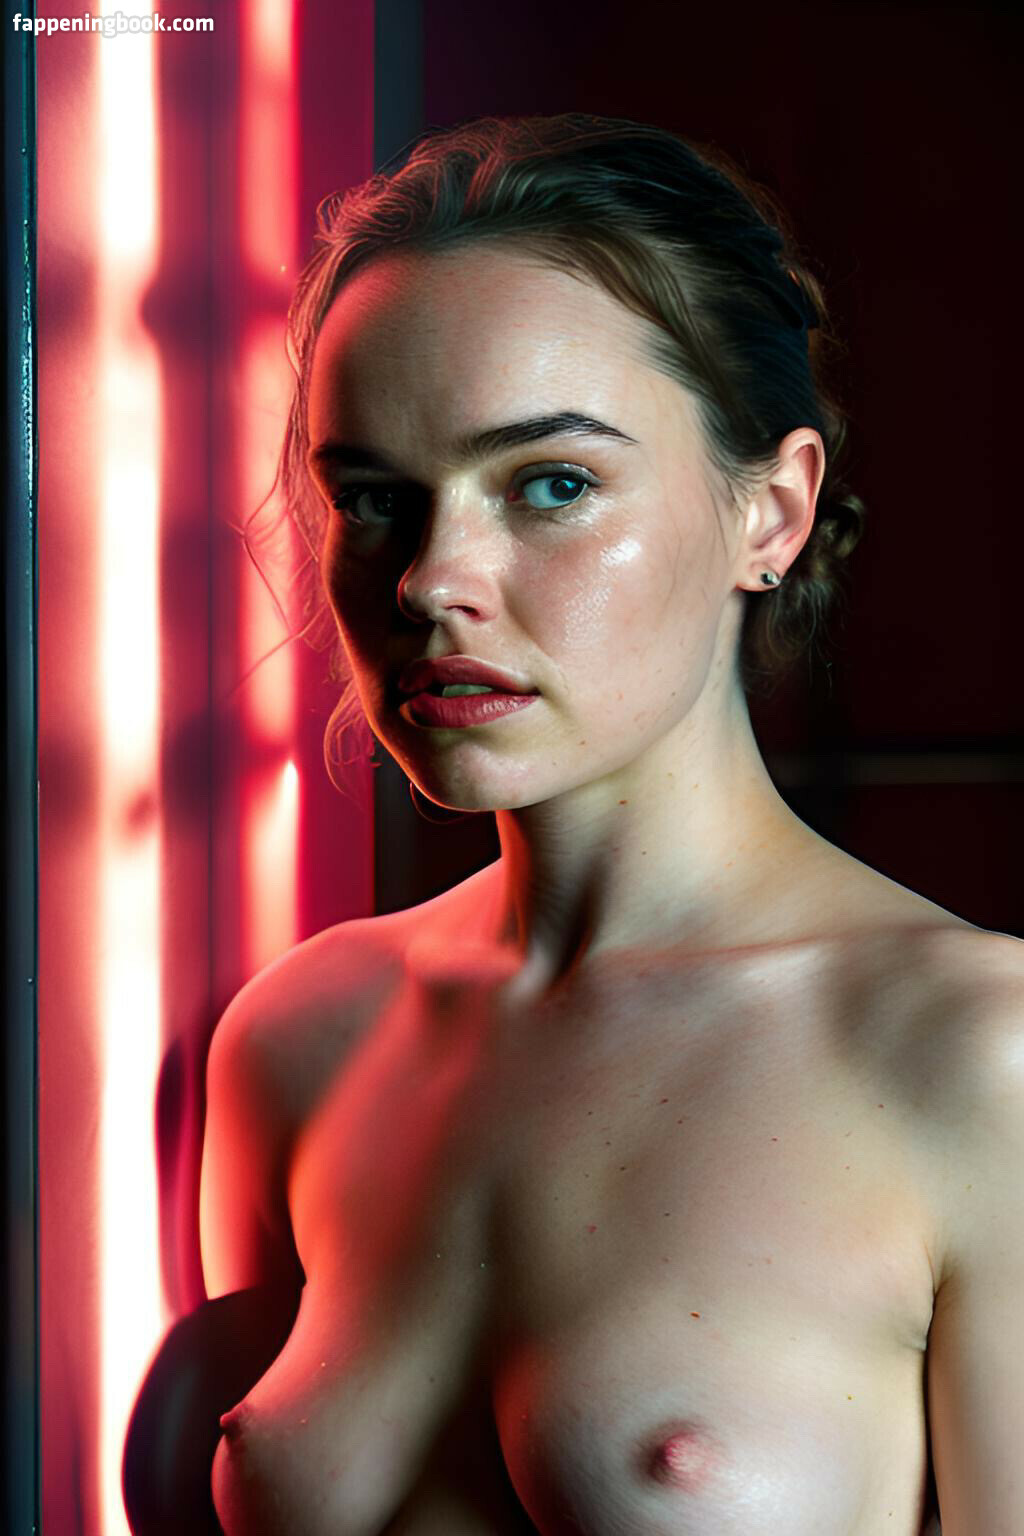 https://fappeningbook.com/photos/a/i/ai-generated-celebrity-nudes/1000/143.jpg